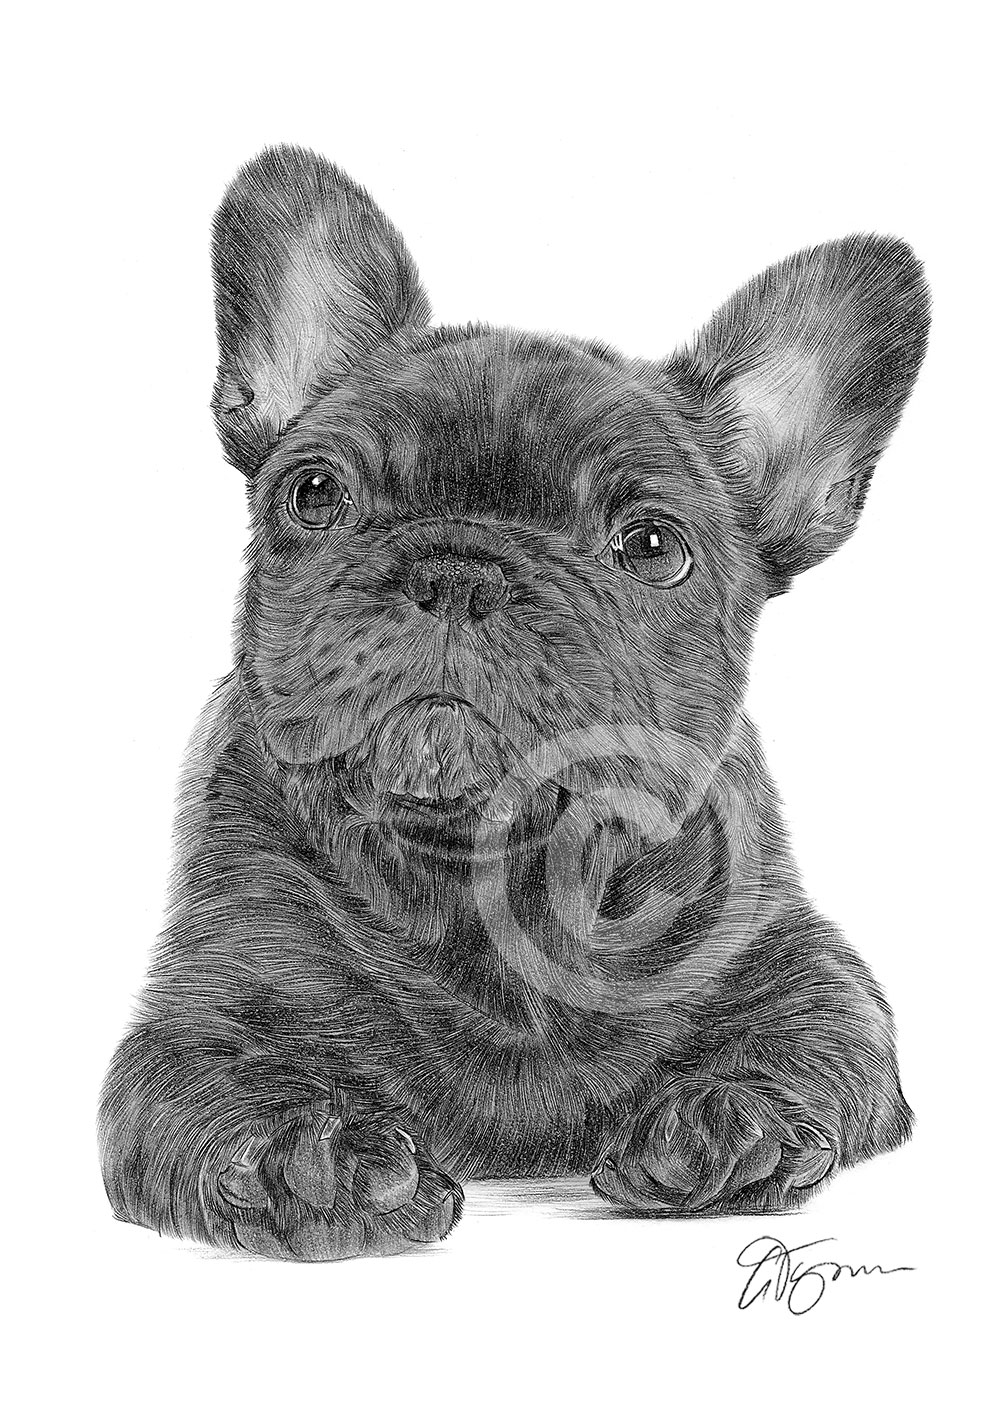 Pencil drawing of a French Bulldog puppy by artist Gary Tymon